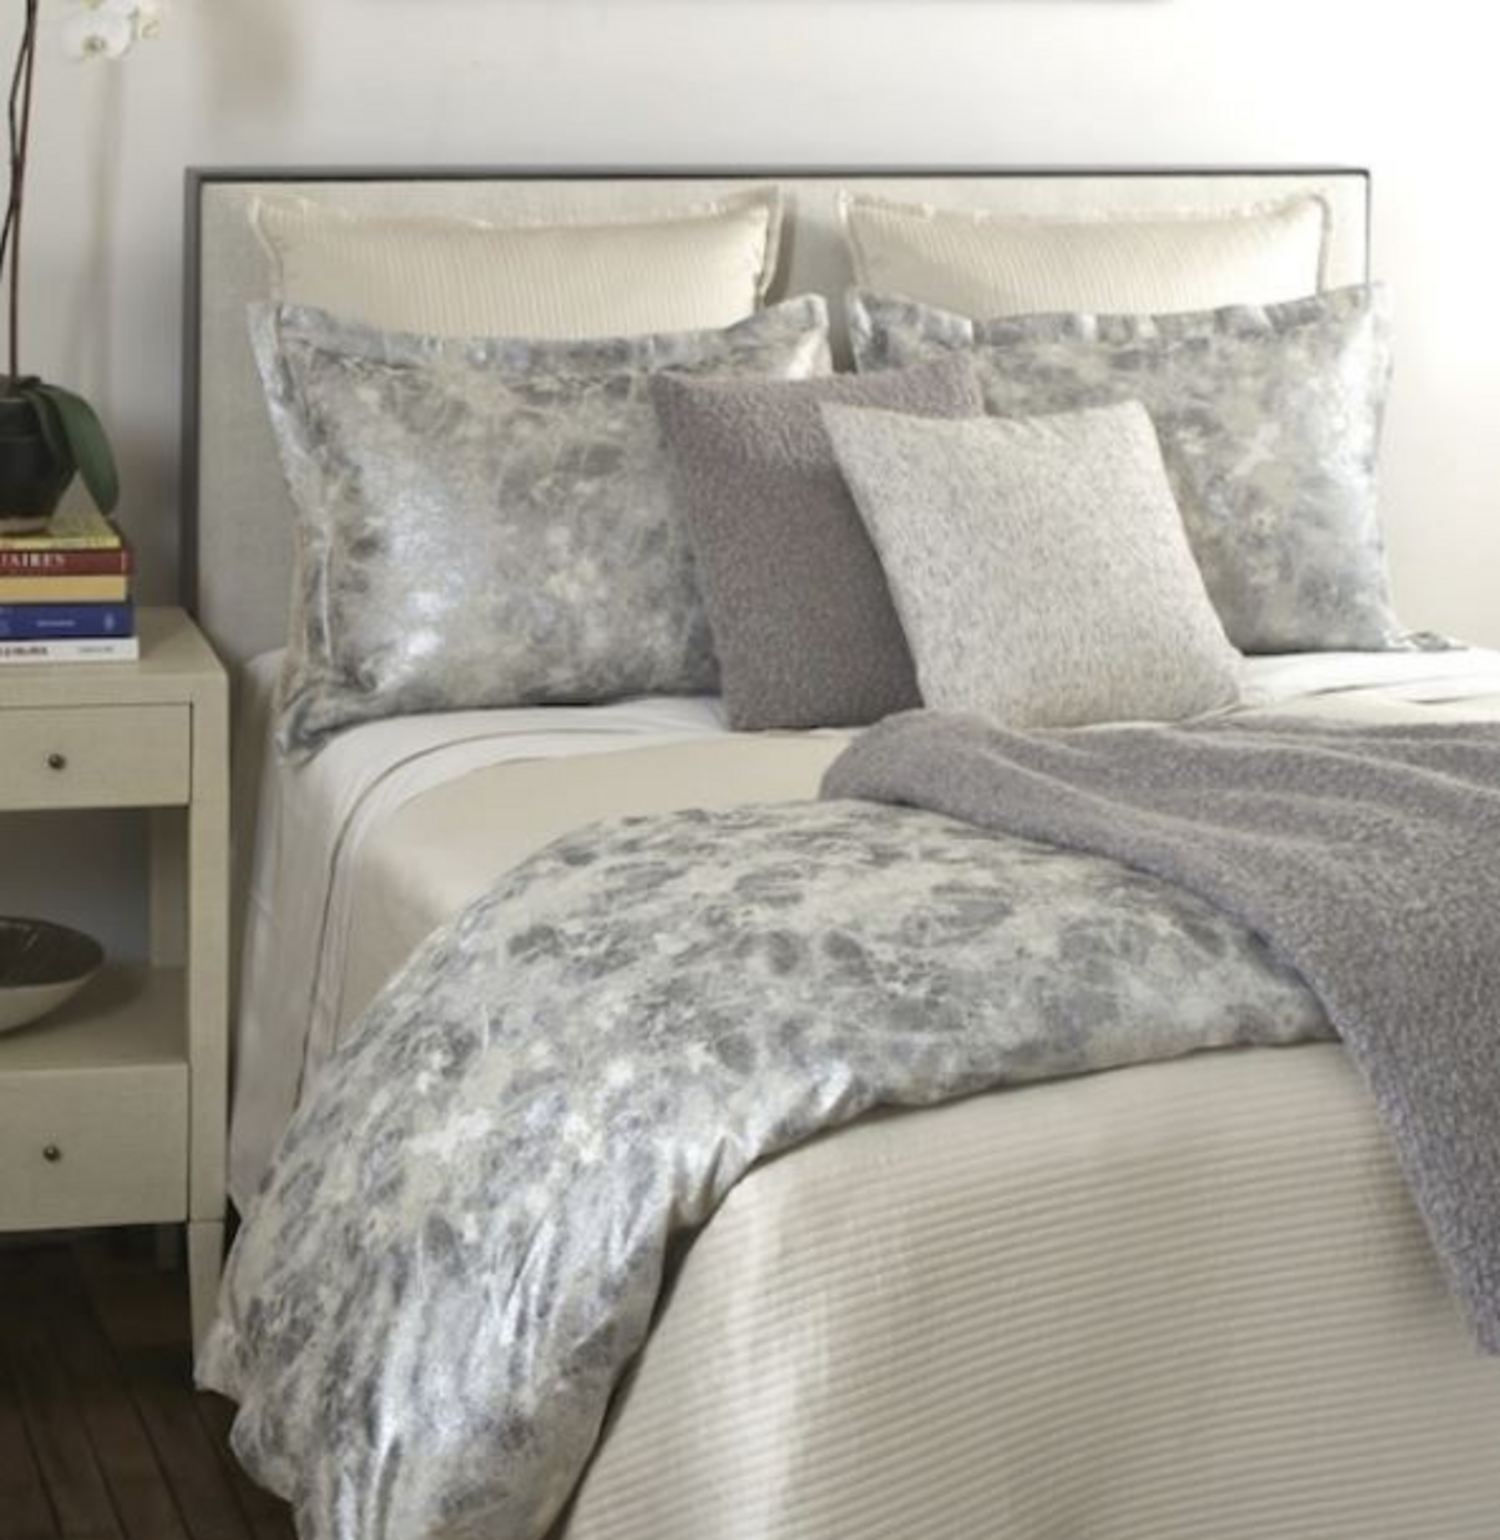 Terrazzo By Ann Gish Art Of Home Bedding Beddingsuperstore Com